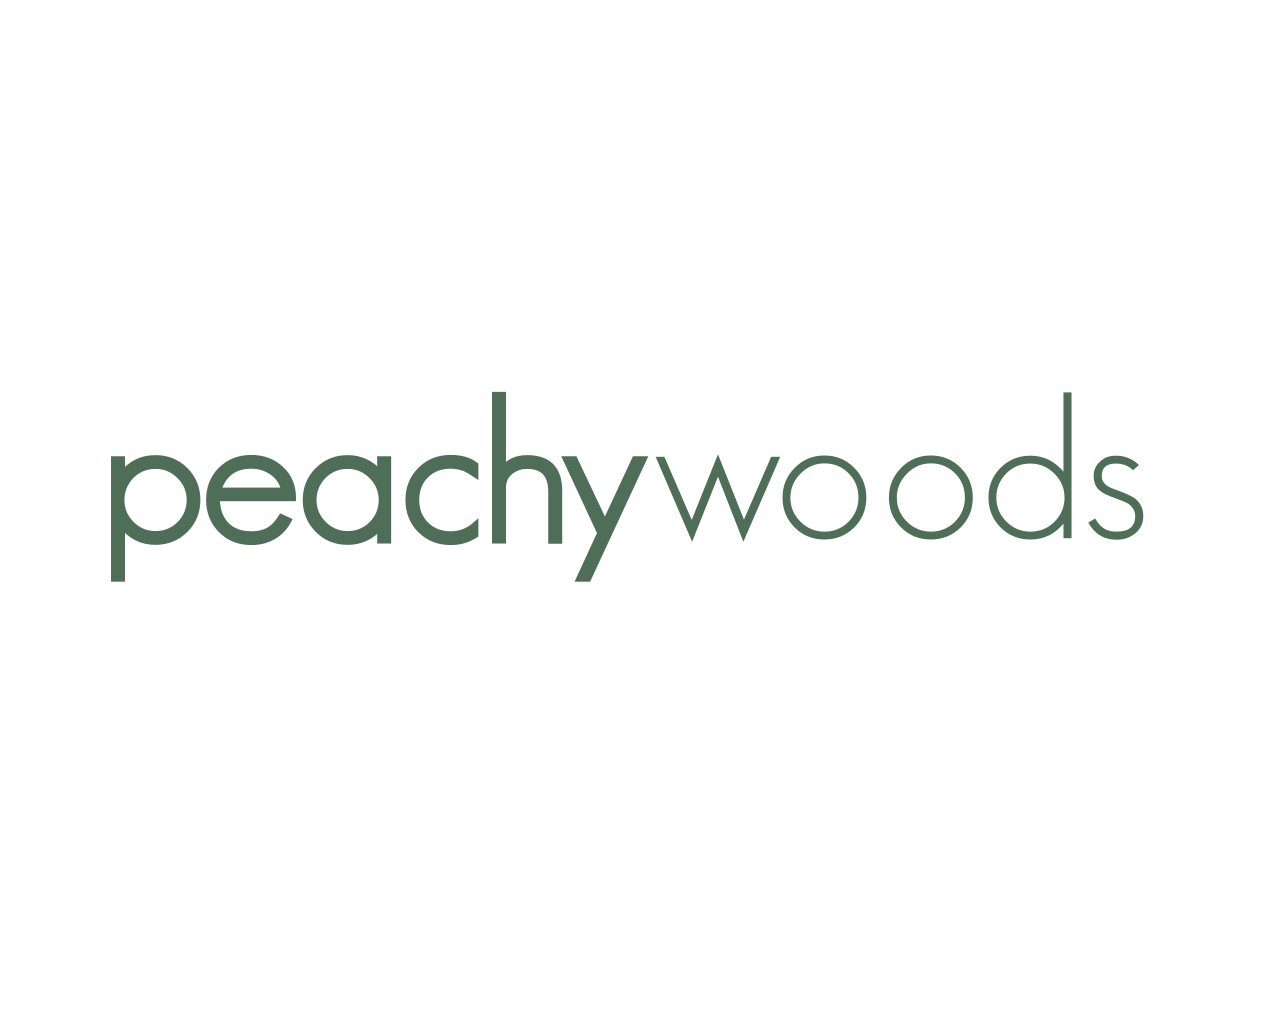 Peachy Woods